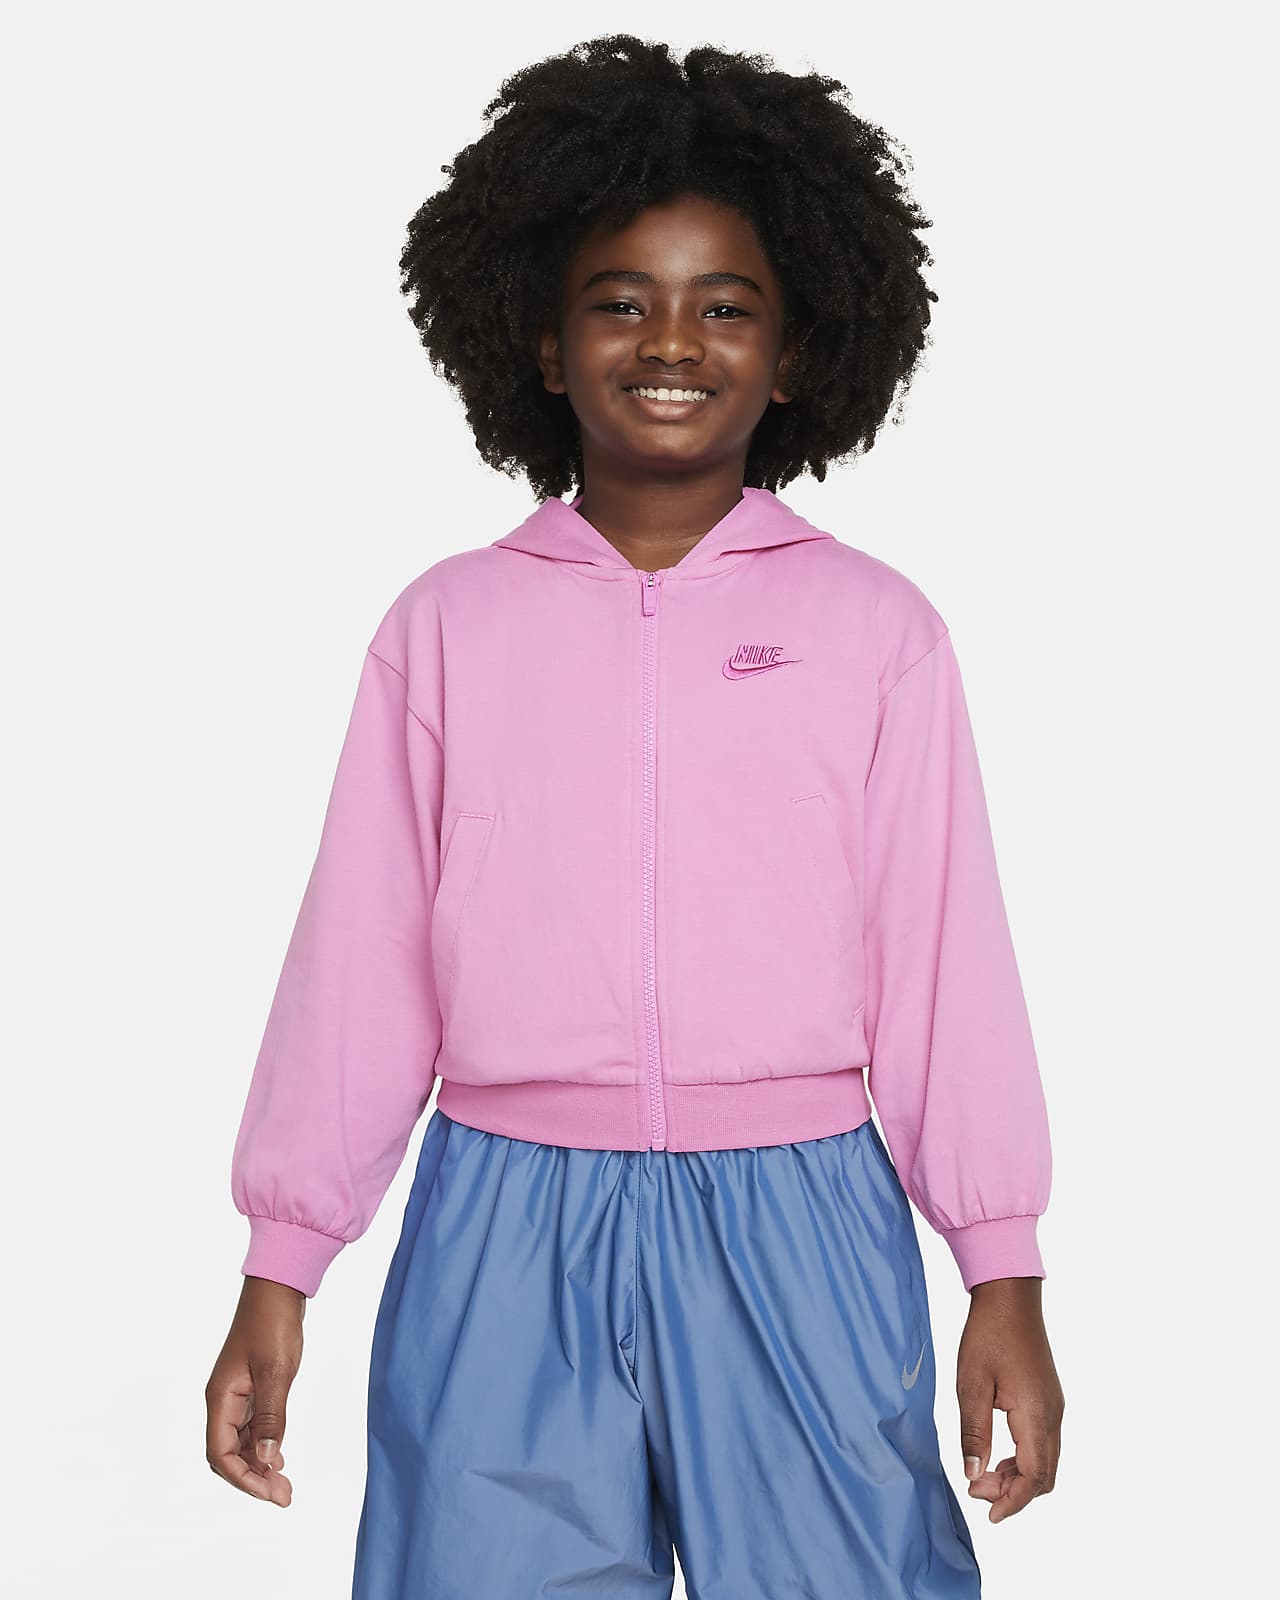 Nike Sportswear Dessuadora amb caputxa i cremallera completa - Nena